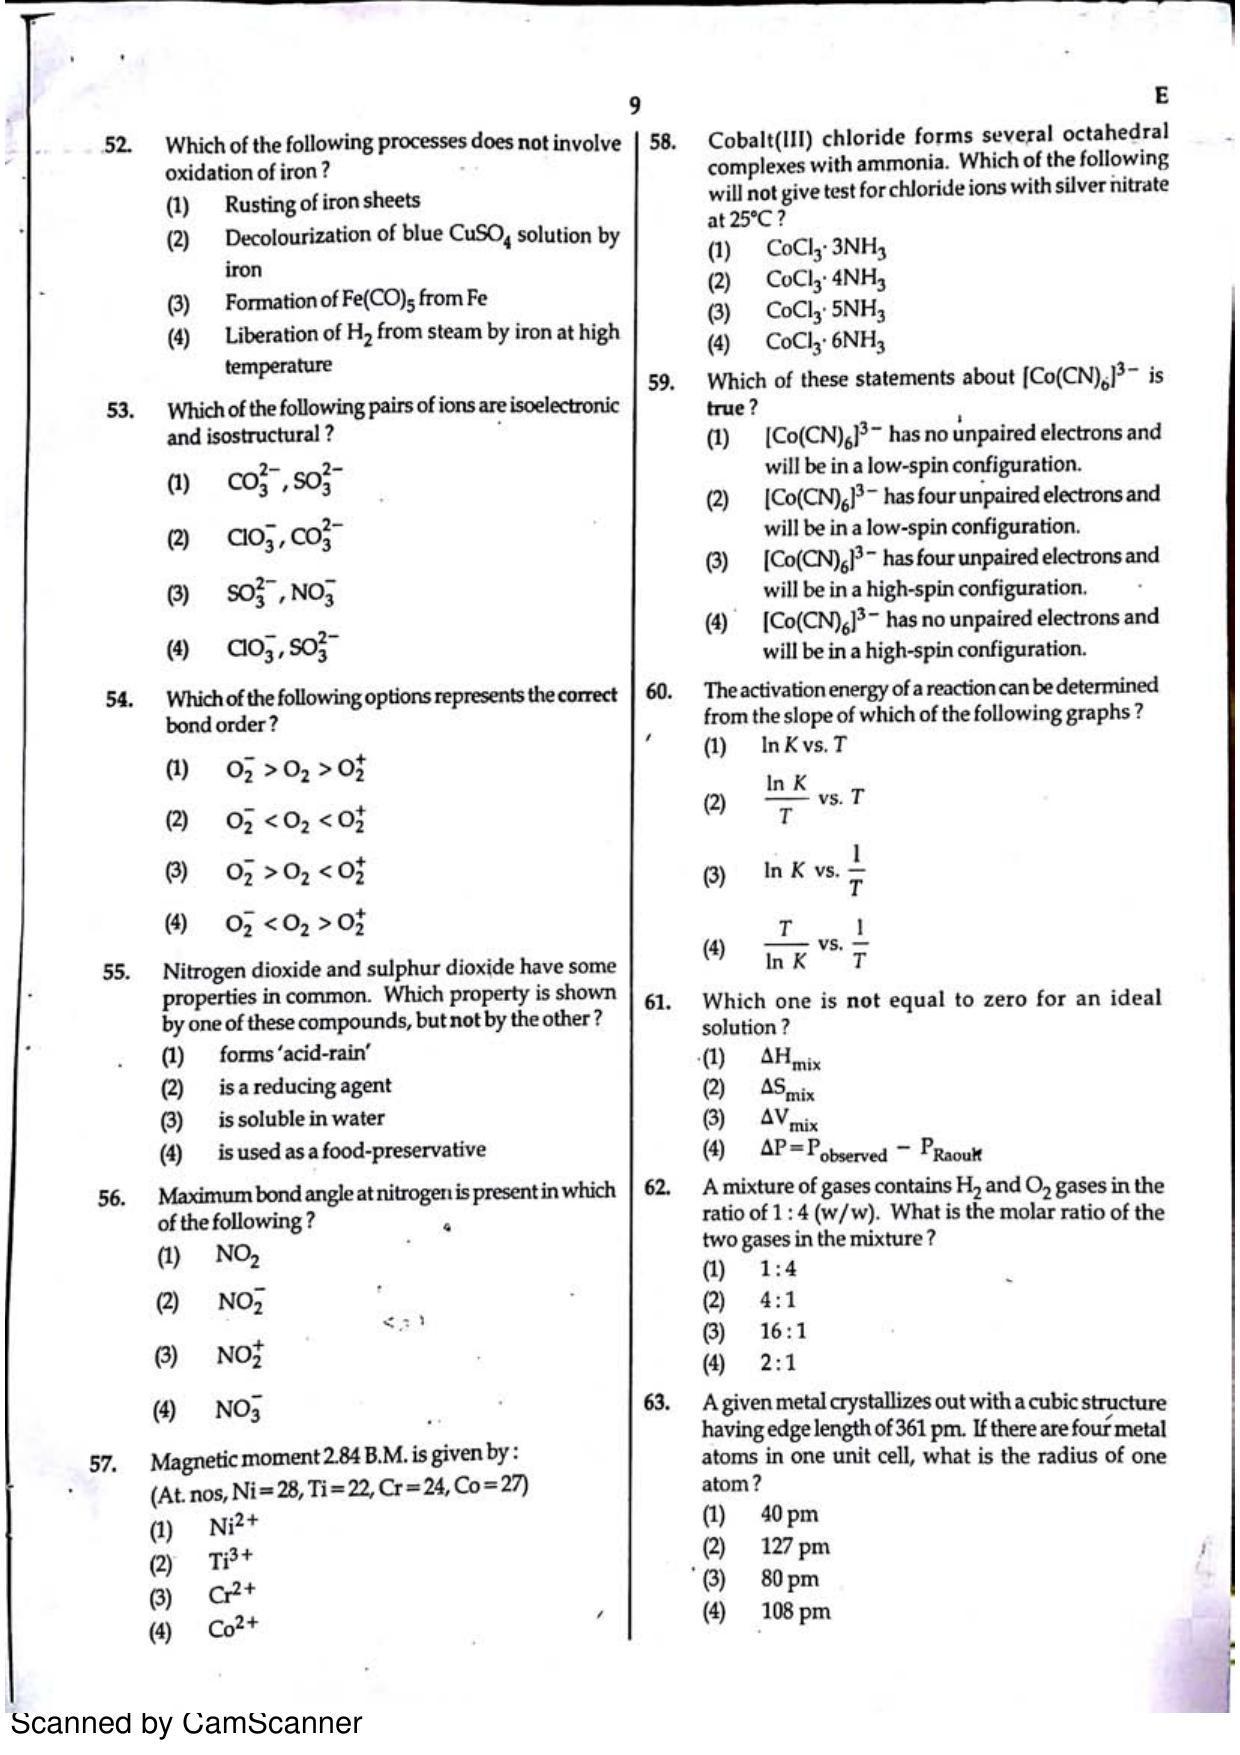 NEET Code E 2015 Question Paper - Page 9